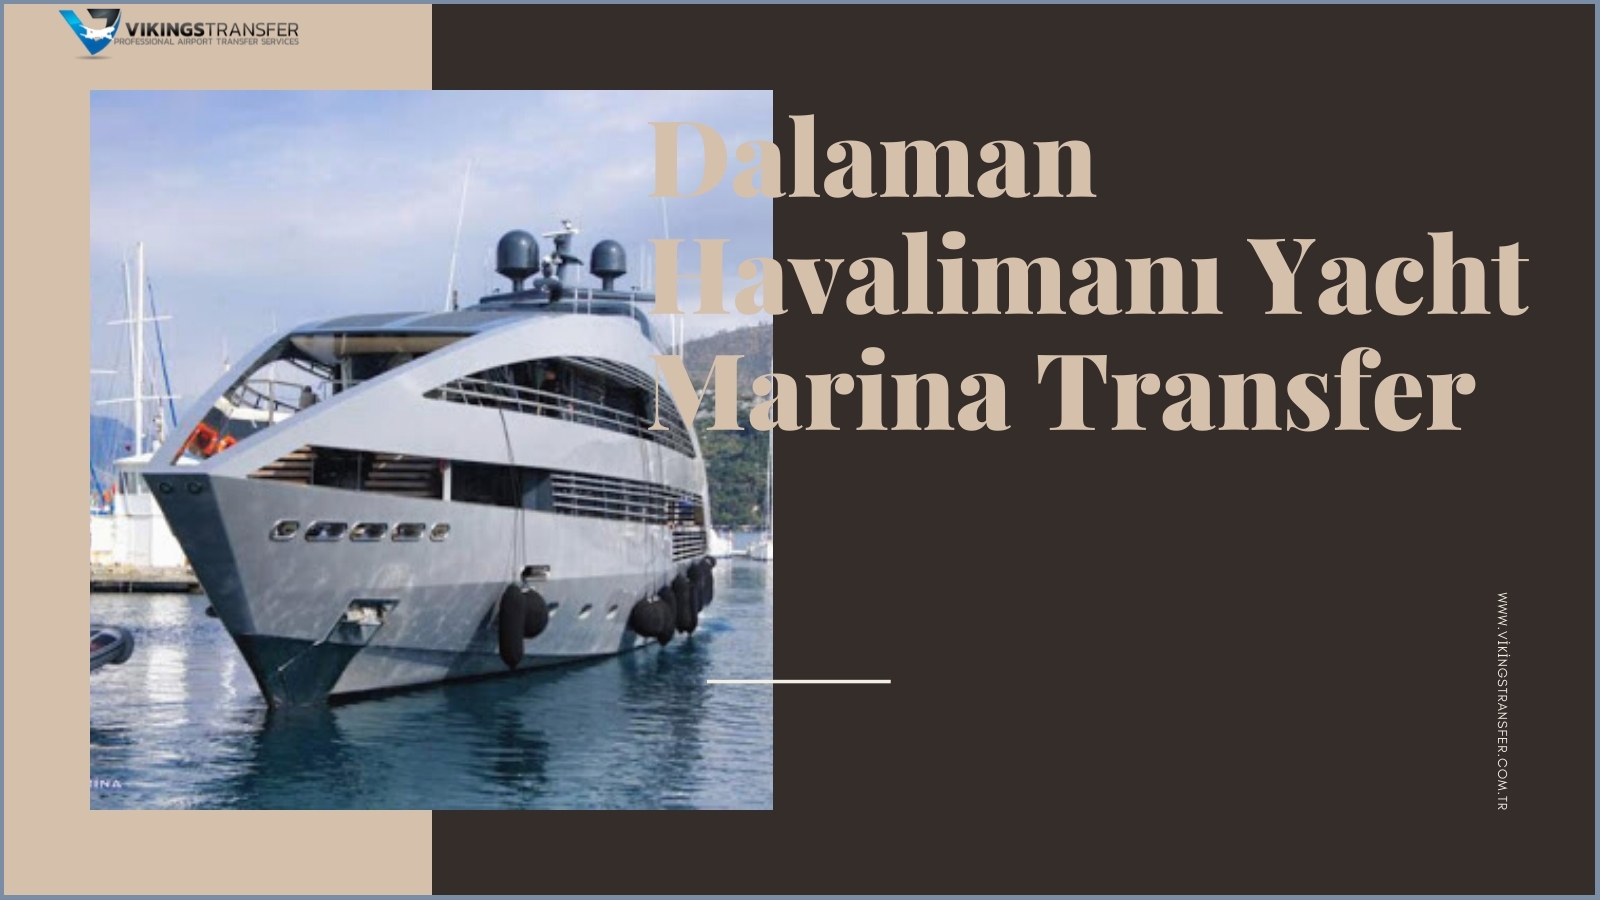 Dalaman havalimanı yacht marina transfer